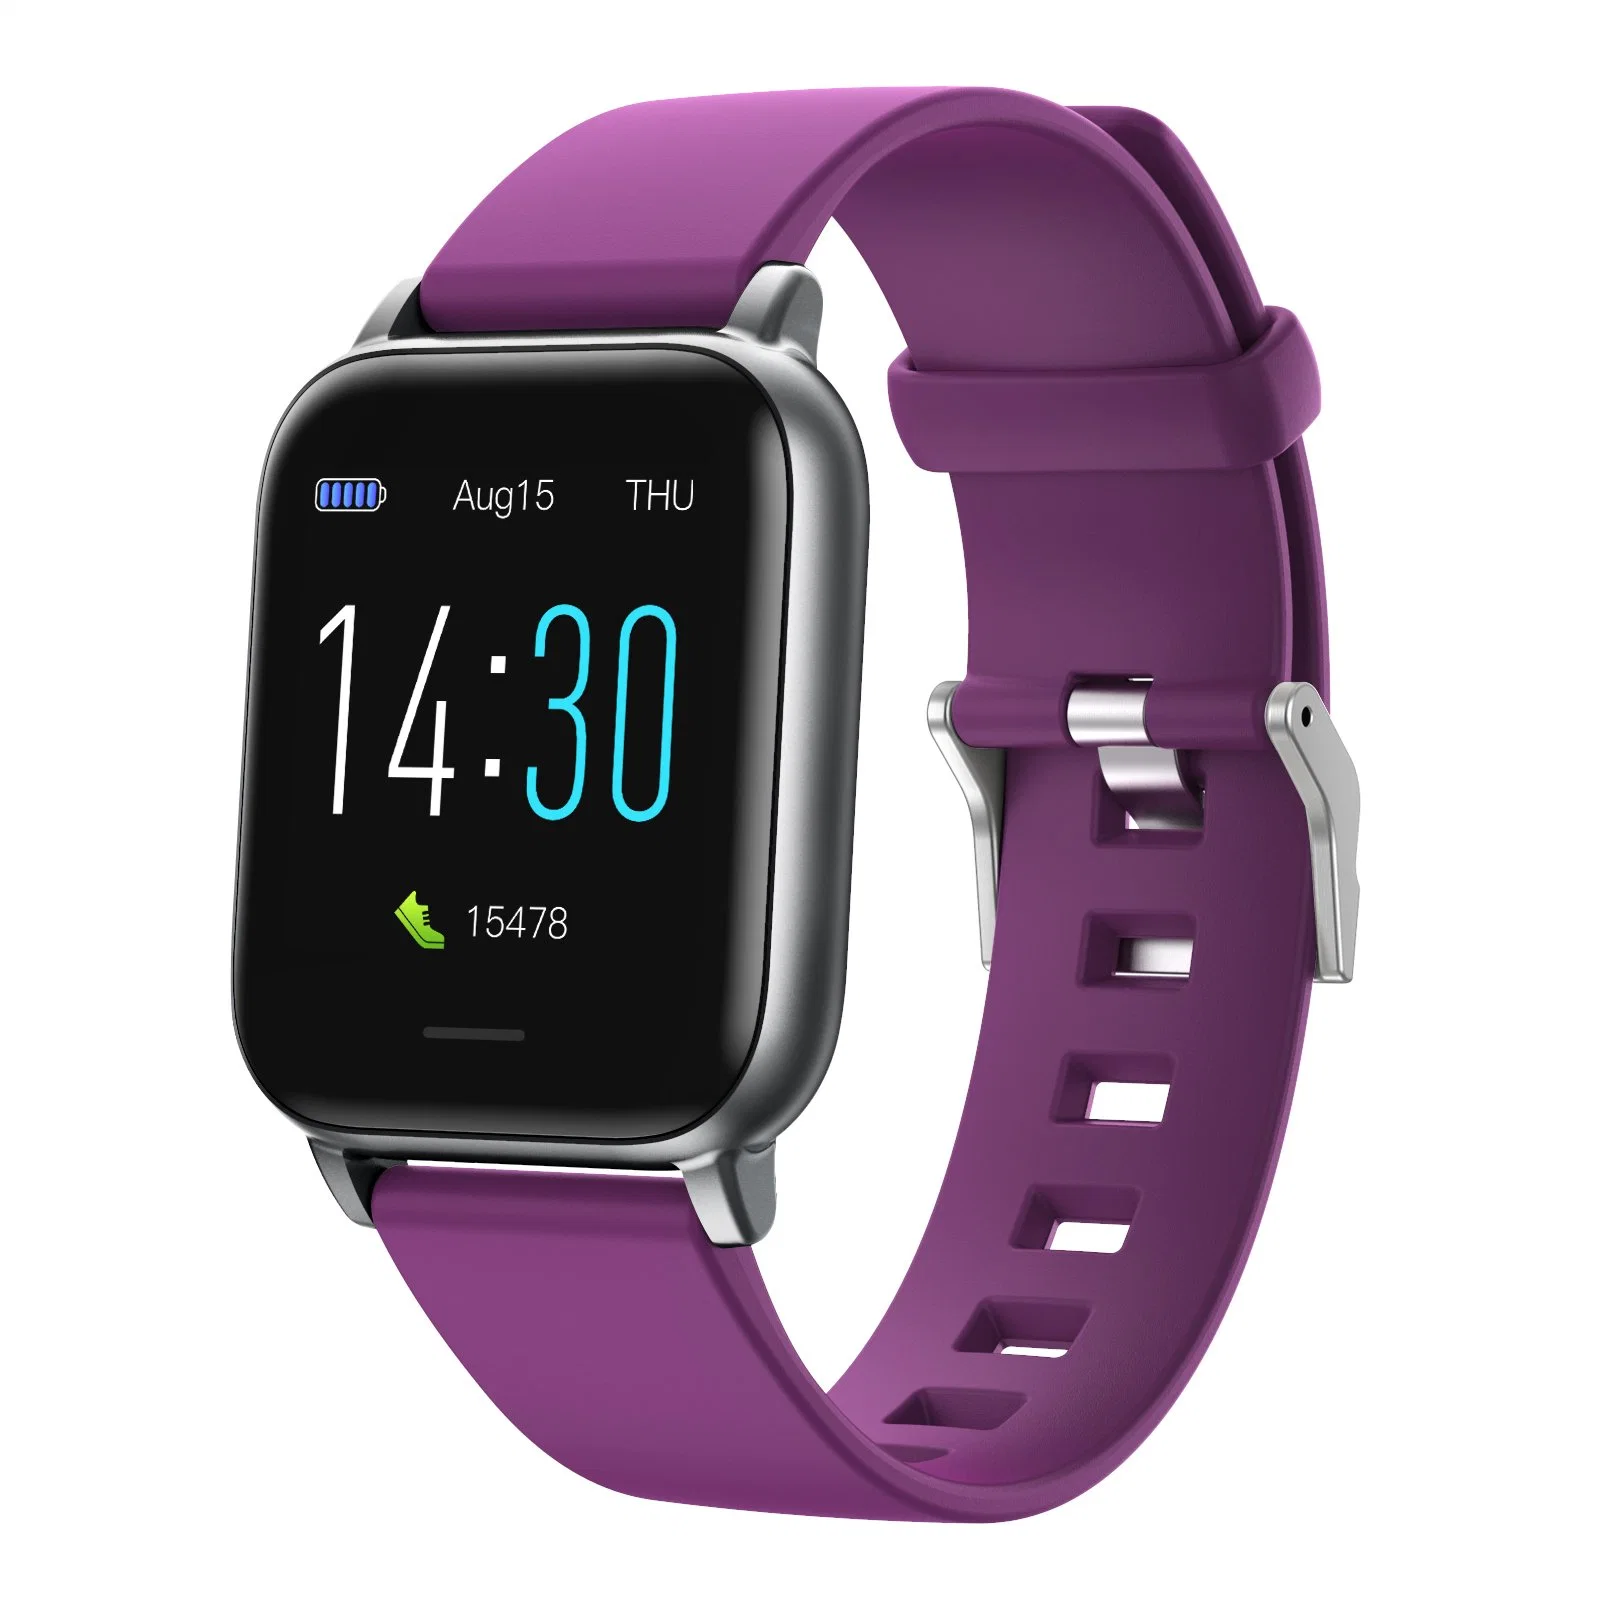 Bluetooth Smart Wrist Watch Phone S50 Smart Phone Wrist Watch 1.54 HD Display Multi-Touch Smart Watch Phone for Man